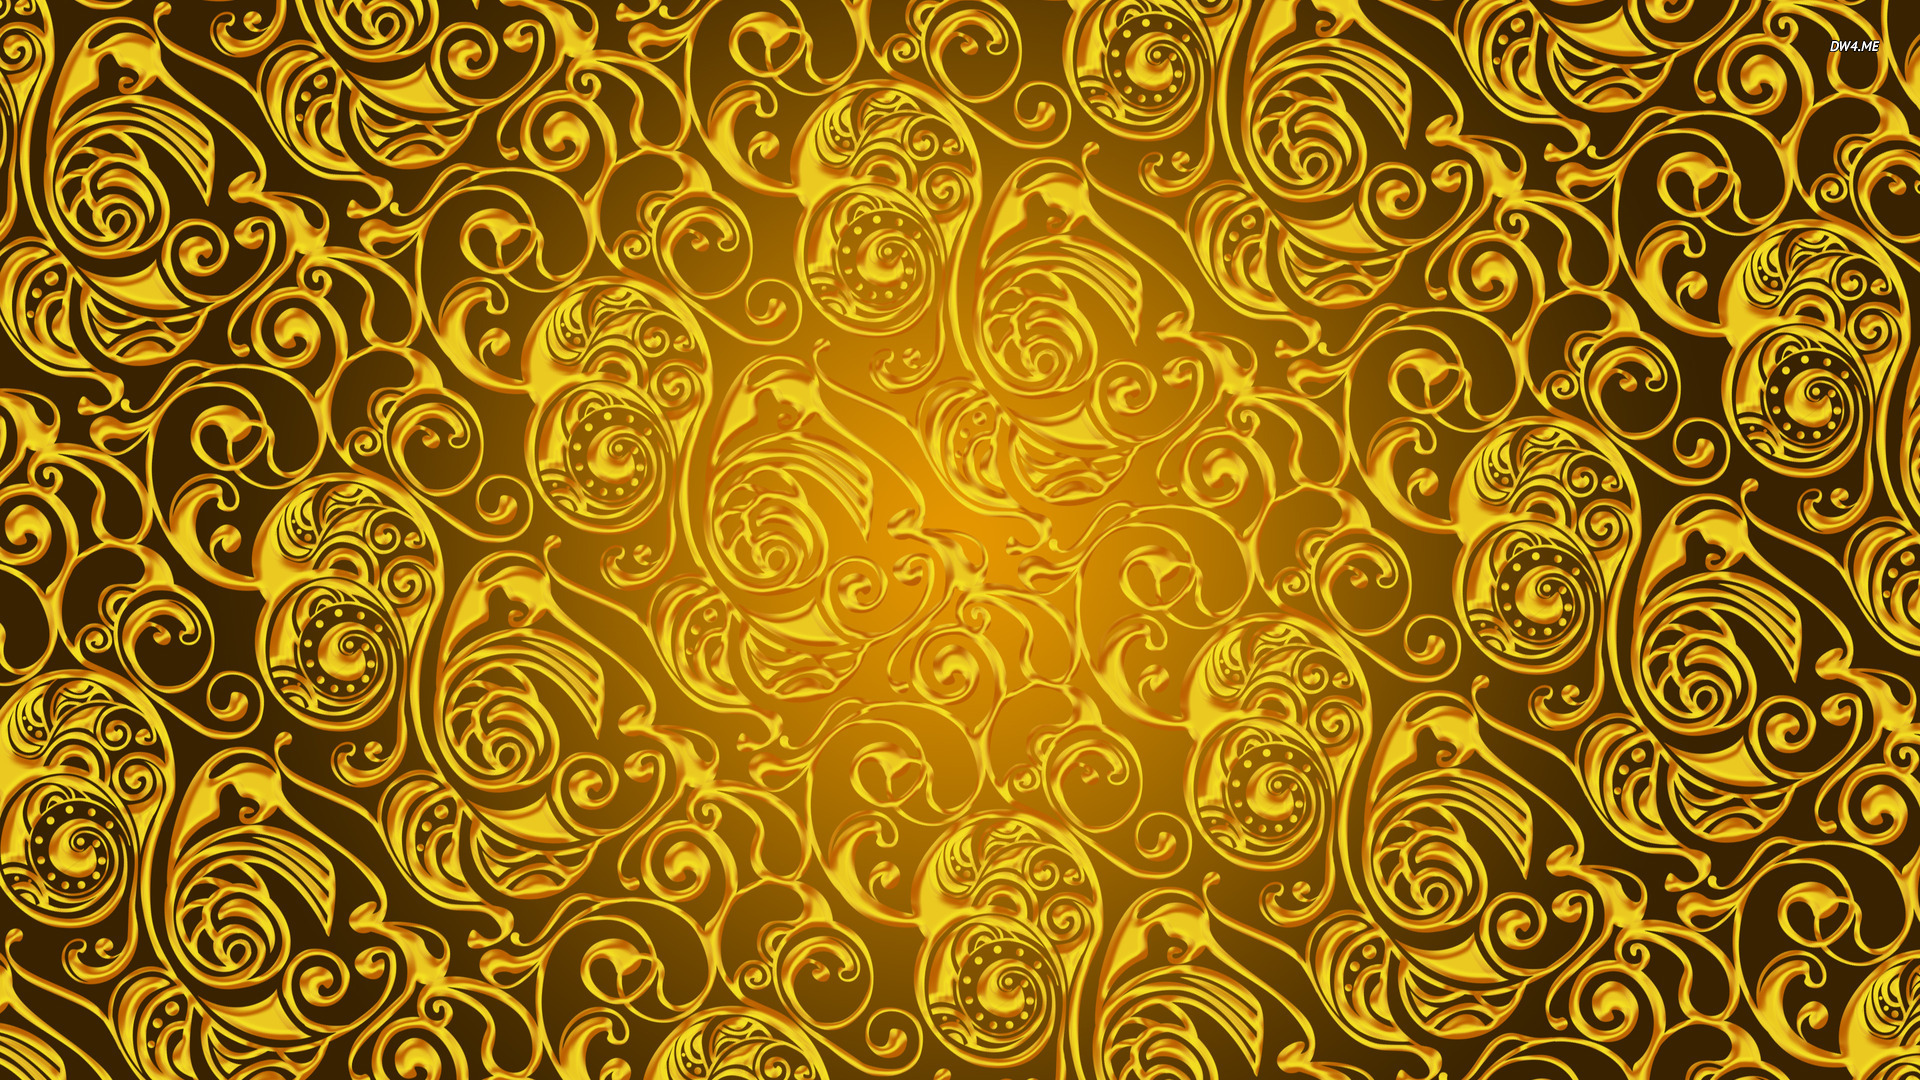 Gold pattern wallpaper   Digital Art wallpapers   1927 1920x1080